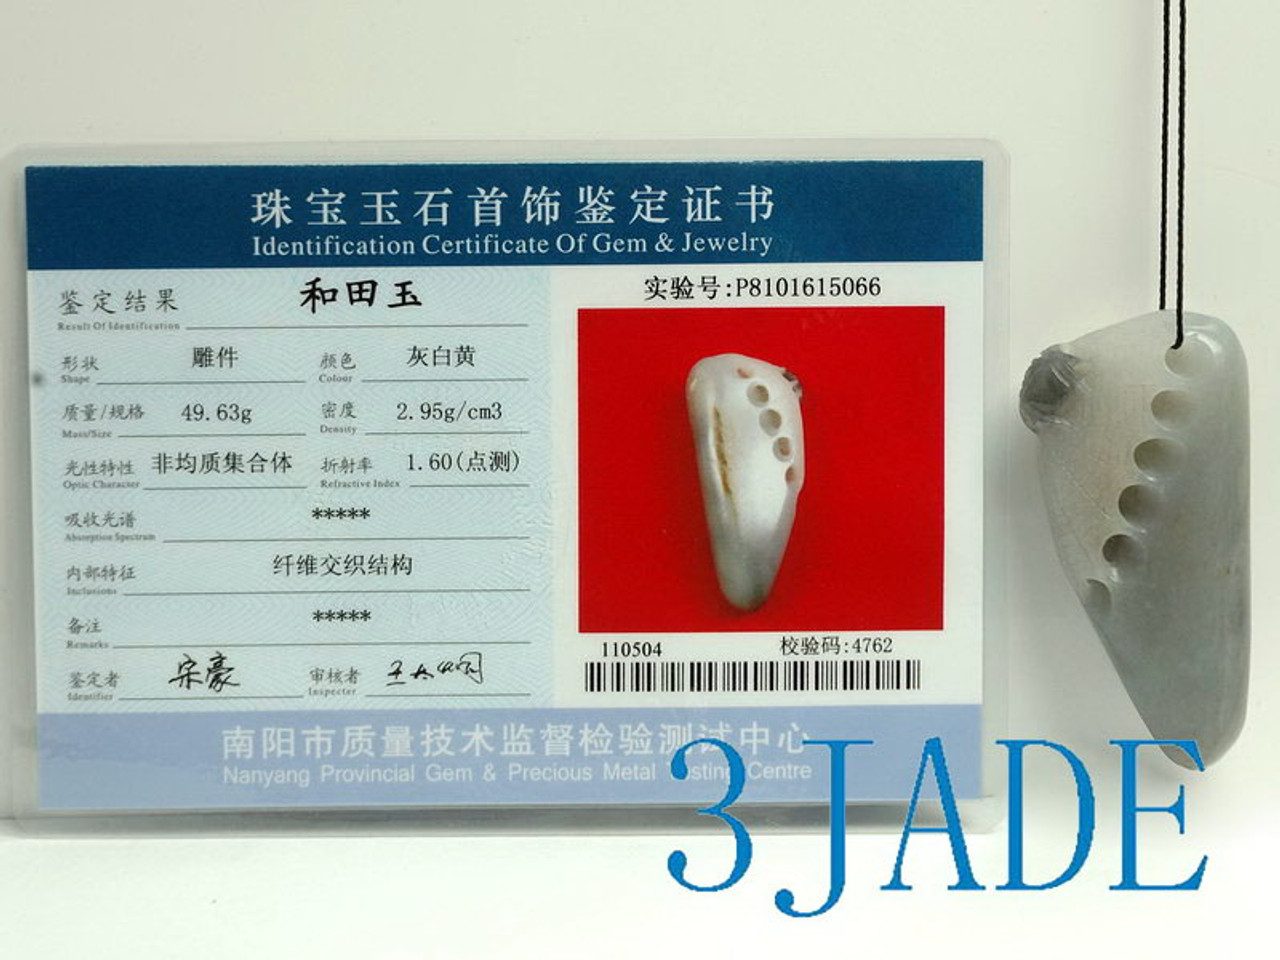 jade Certificate